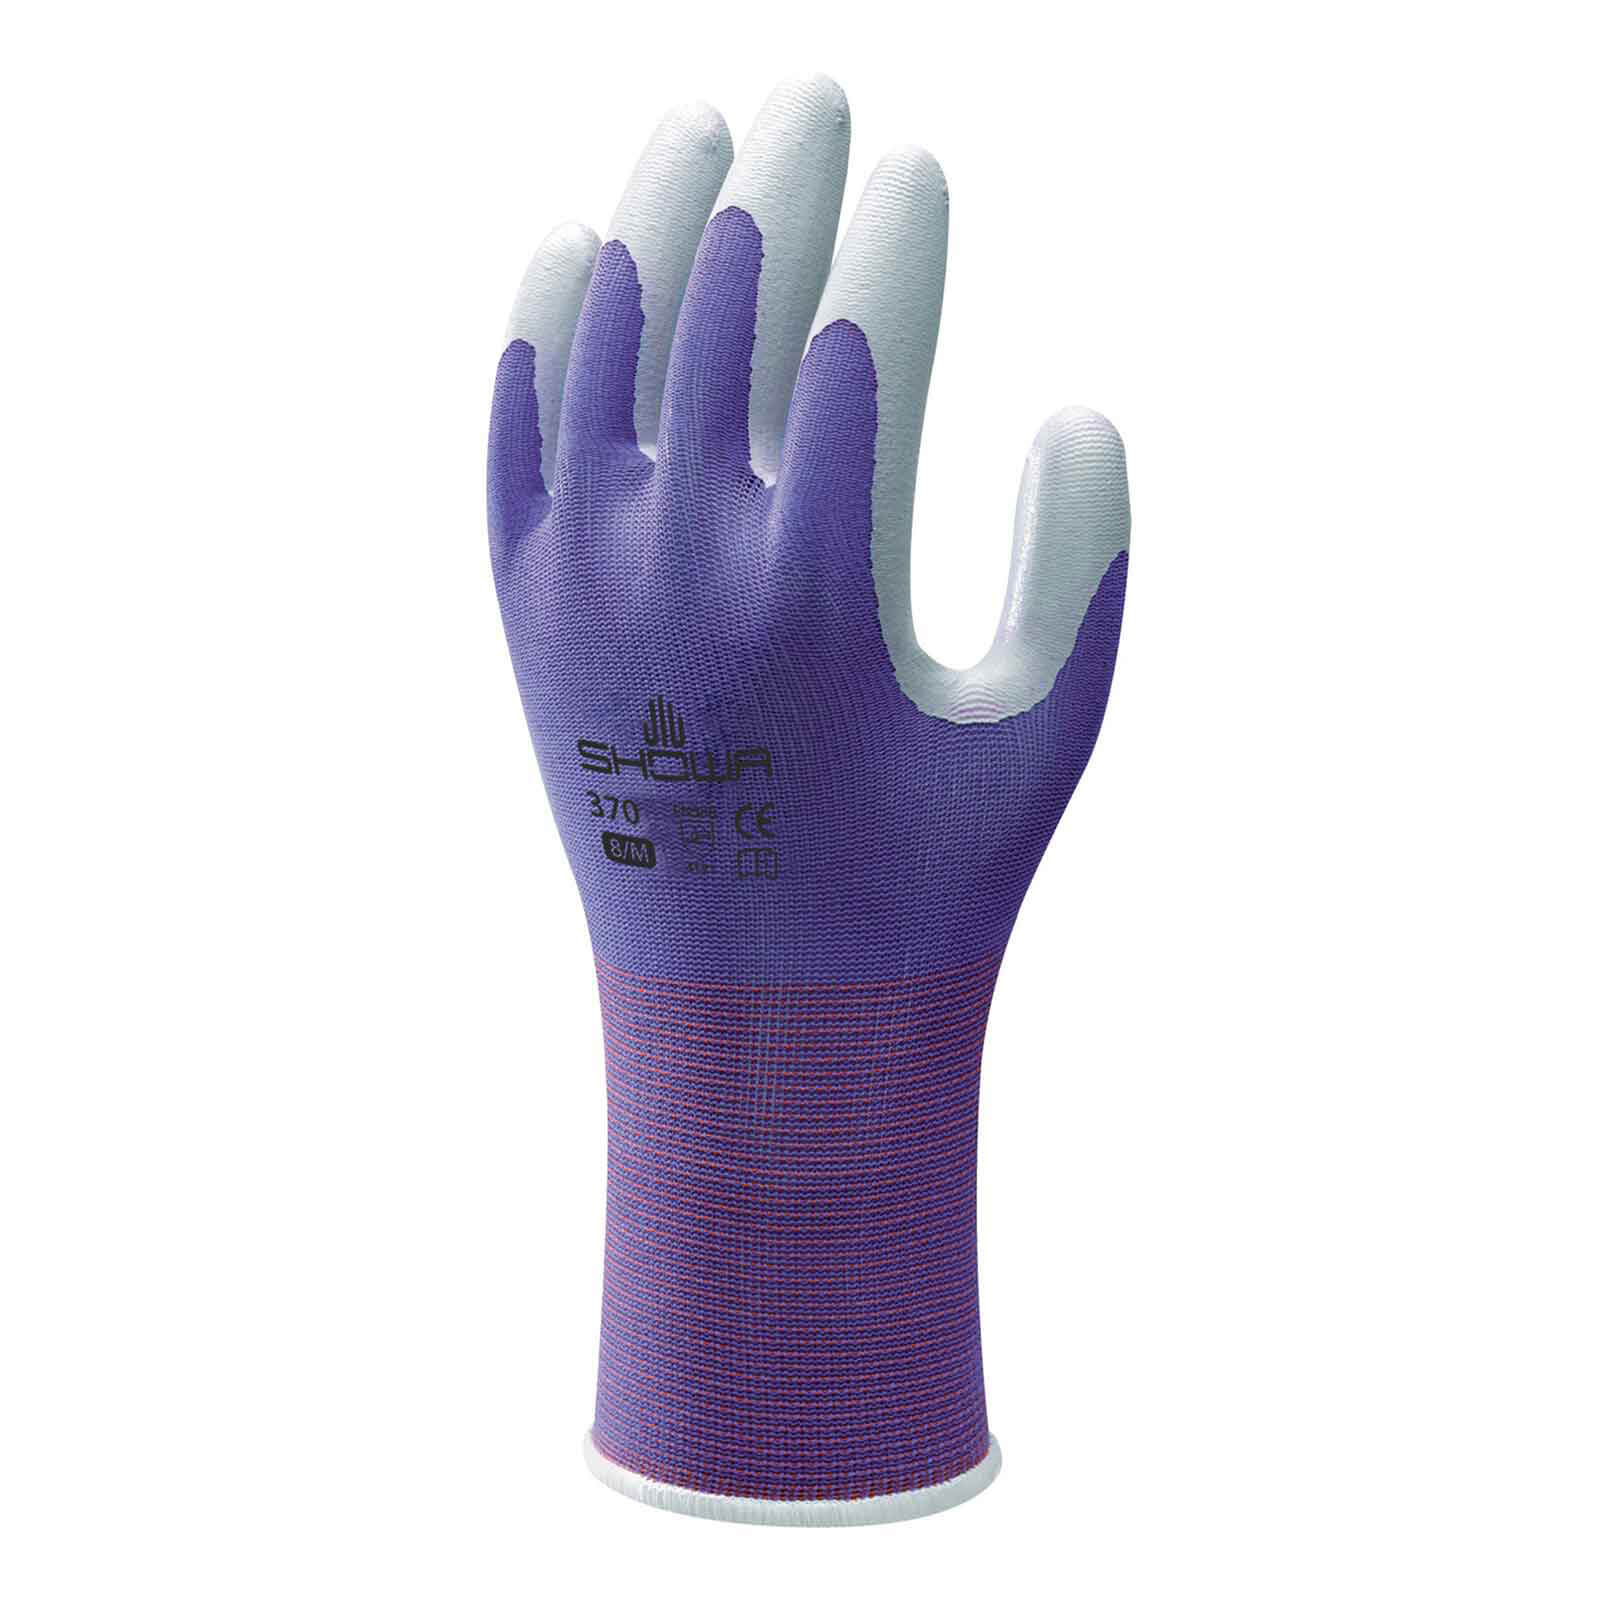 Image of Kew Gardens Multi Purpose Nitrile Coated Gardening Gloves Purple M